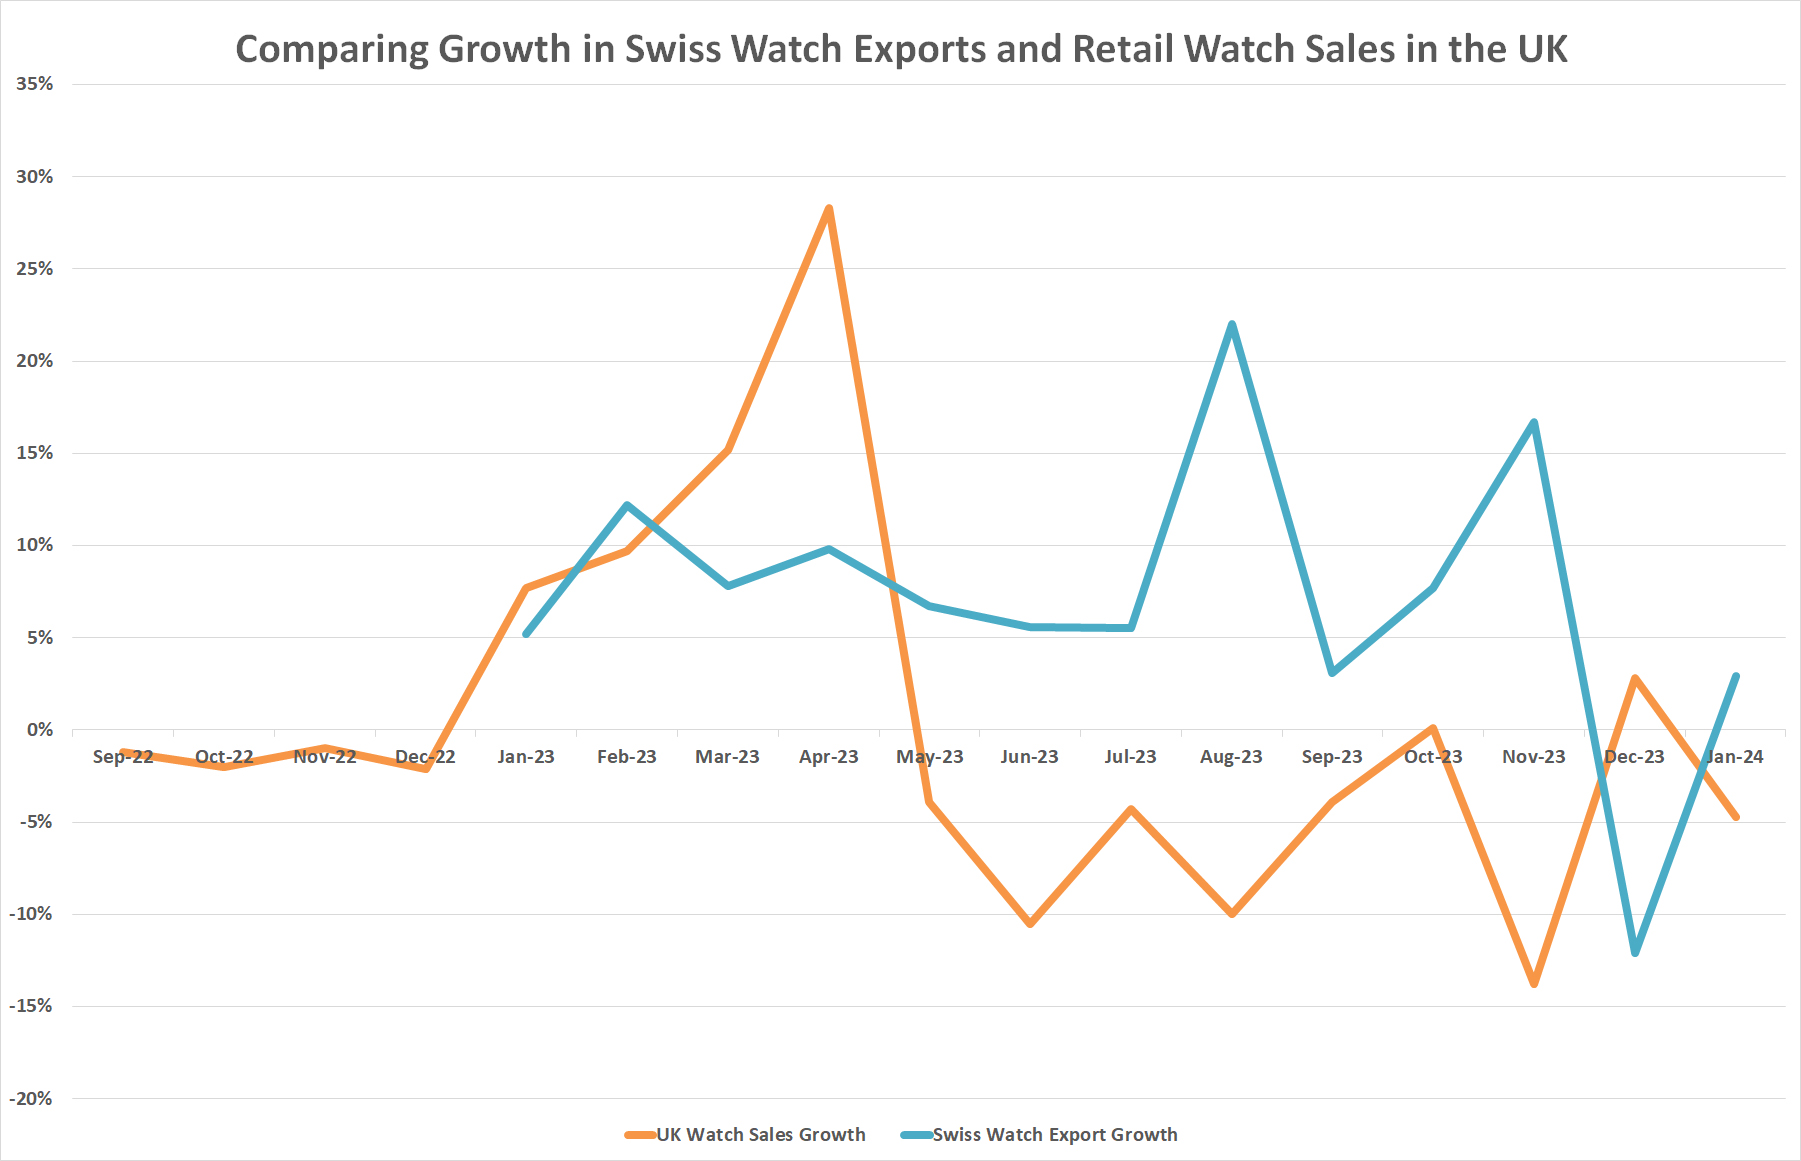 Gfk growth uk sales verus swiss watch exports